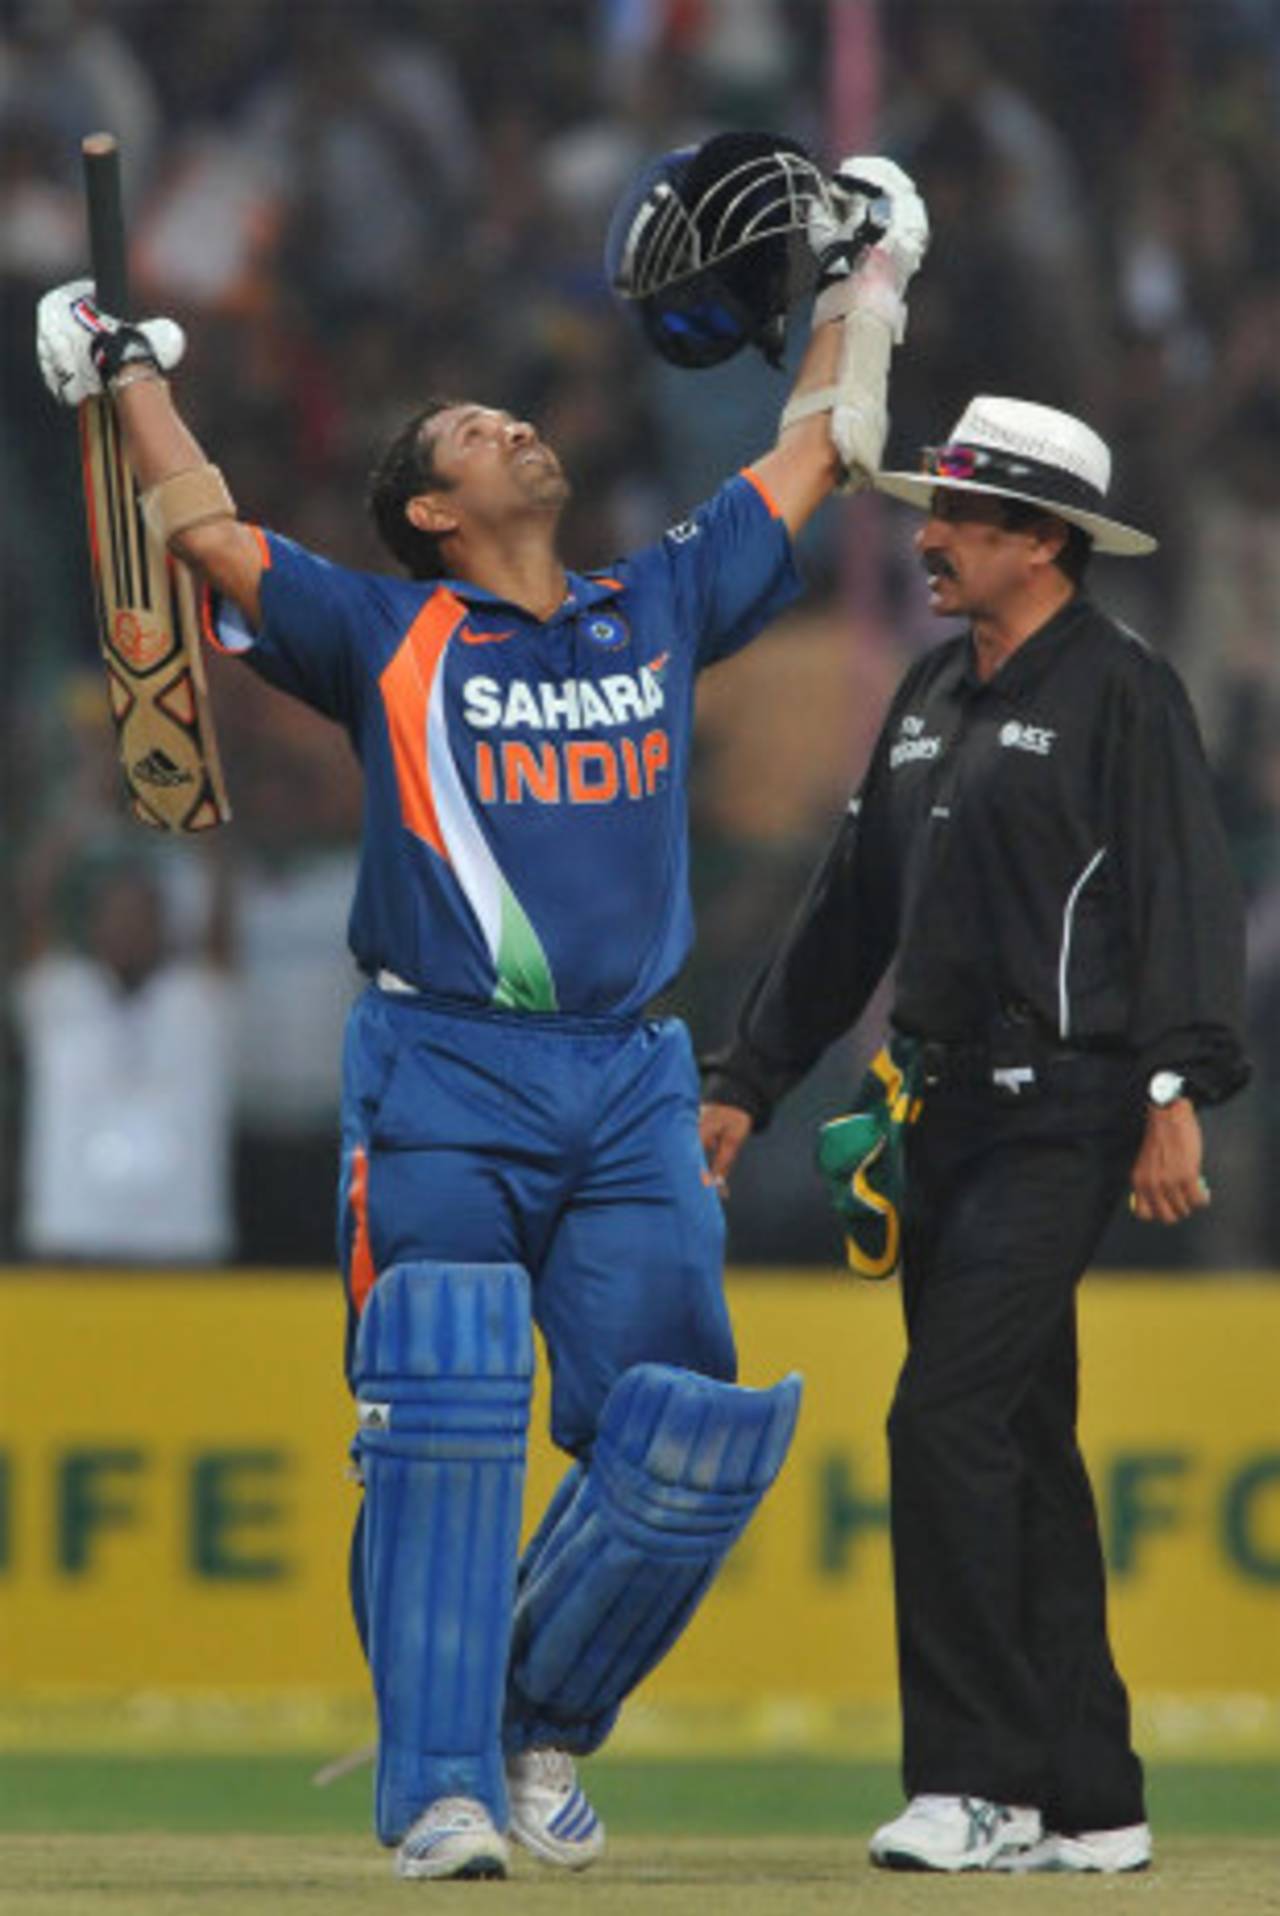 Sachin Tendulkar - breaking records on field and online&nbsp;&nbsp;&bull;&nbsp;&nbsp;Getty Images